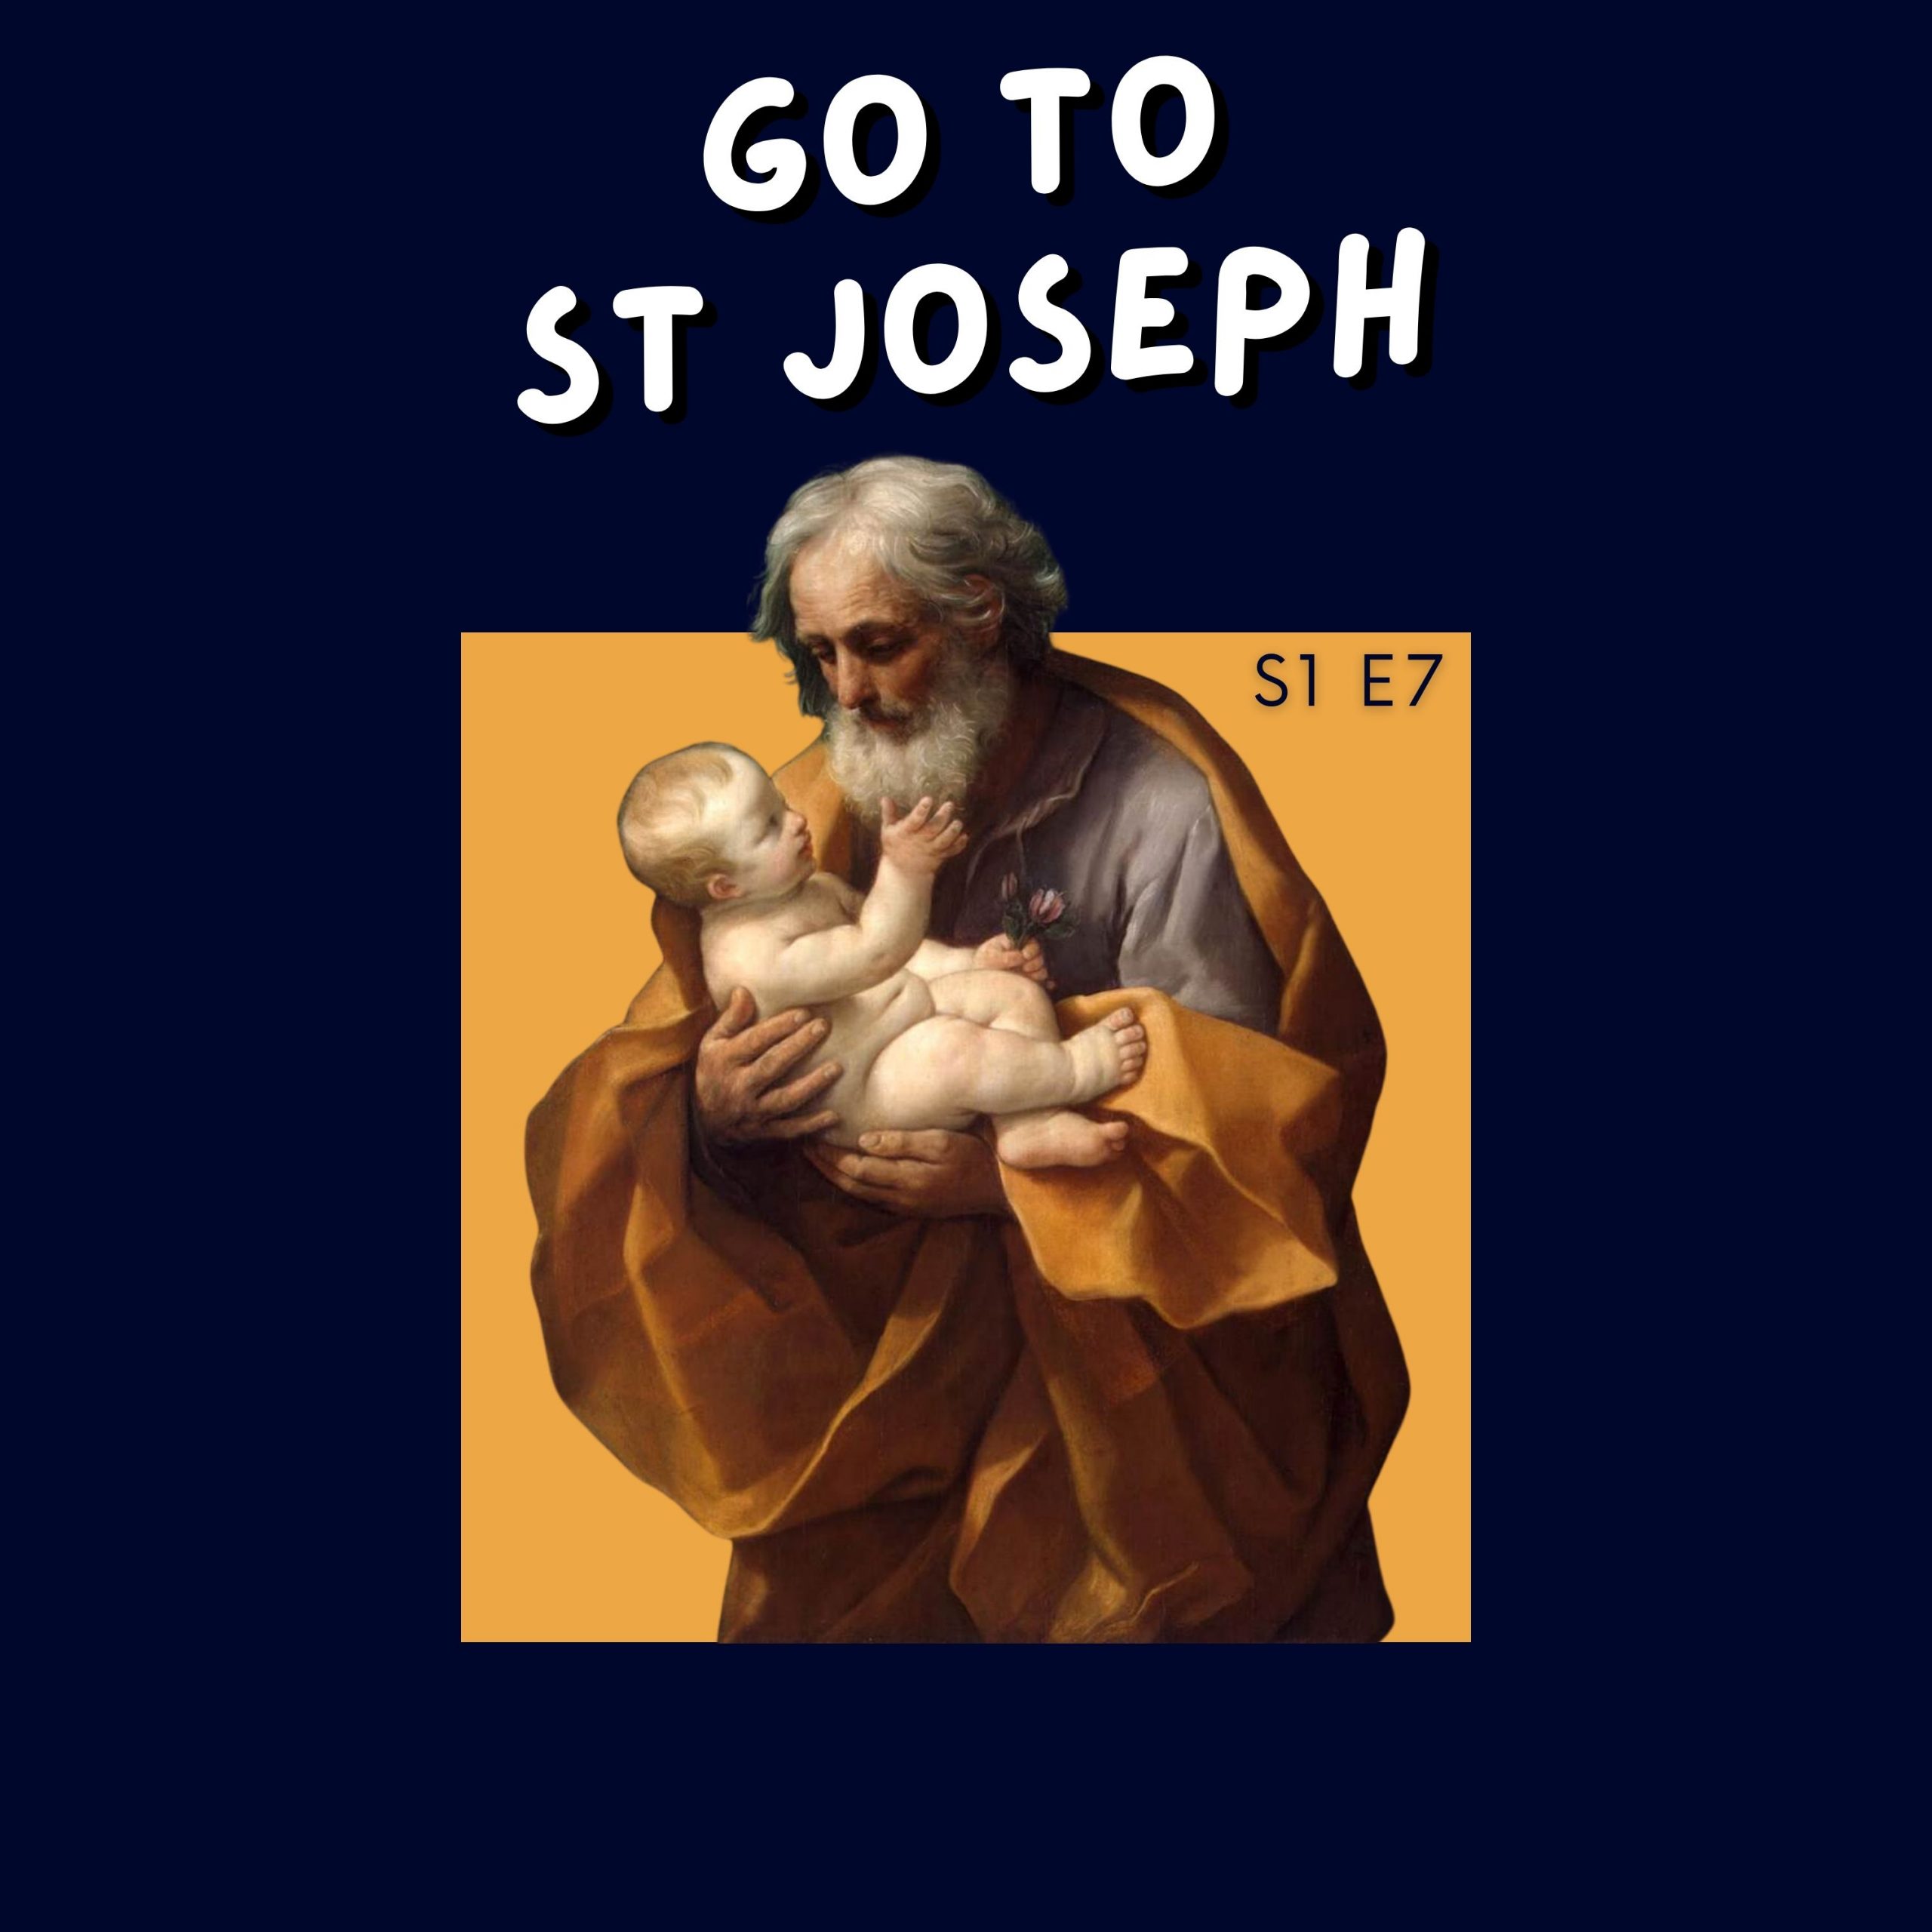 Episode 7: Go to St Joseph